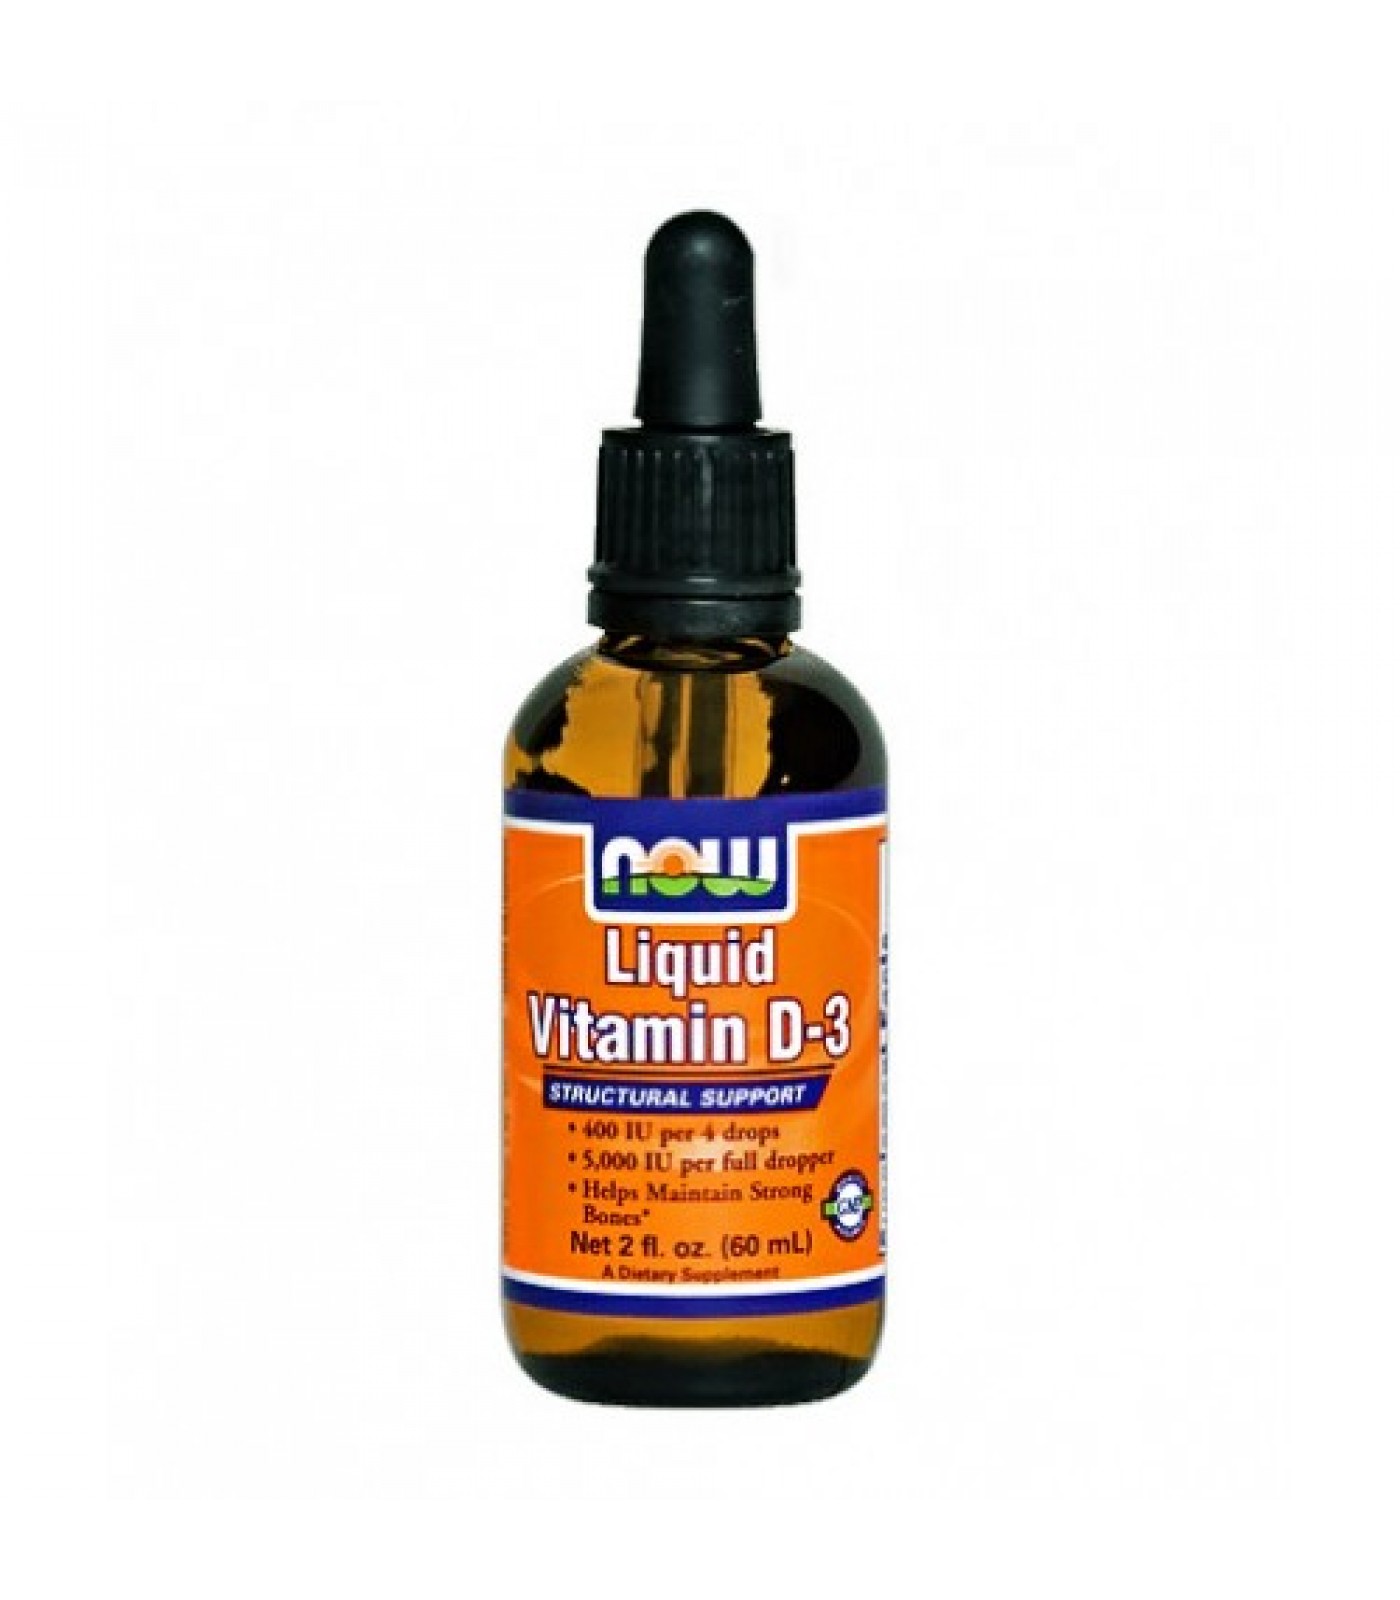 Витамин д3 400. Liquid Liquid витамин д3. Витамин д 3 Ликвид. Жидкий витамин д3 (Liquid Vitamin d3), 59 мл. Витамин д3 SNT Liquid.